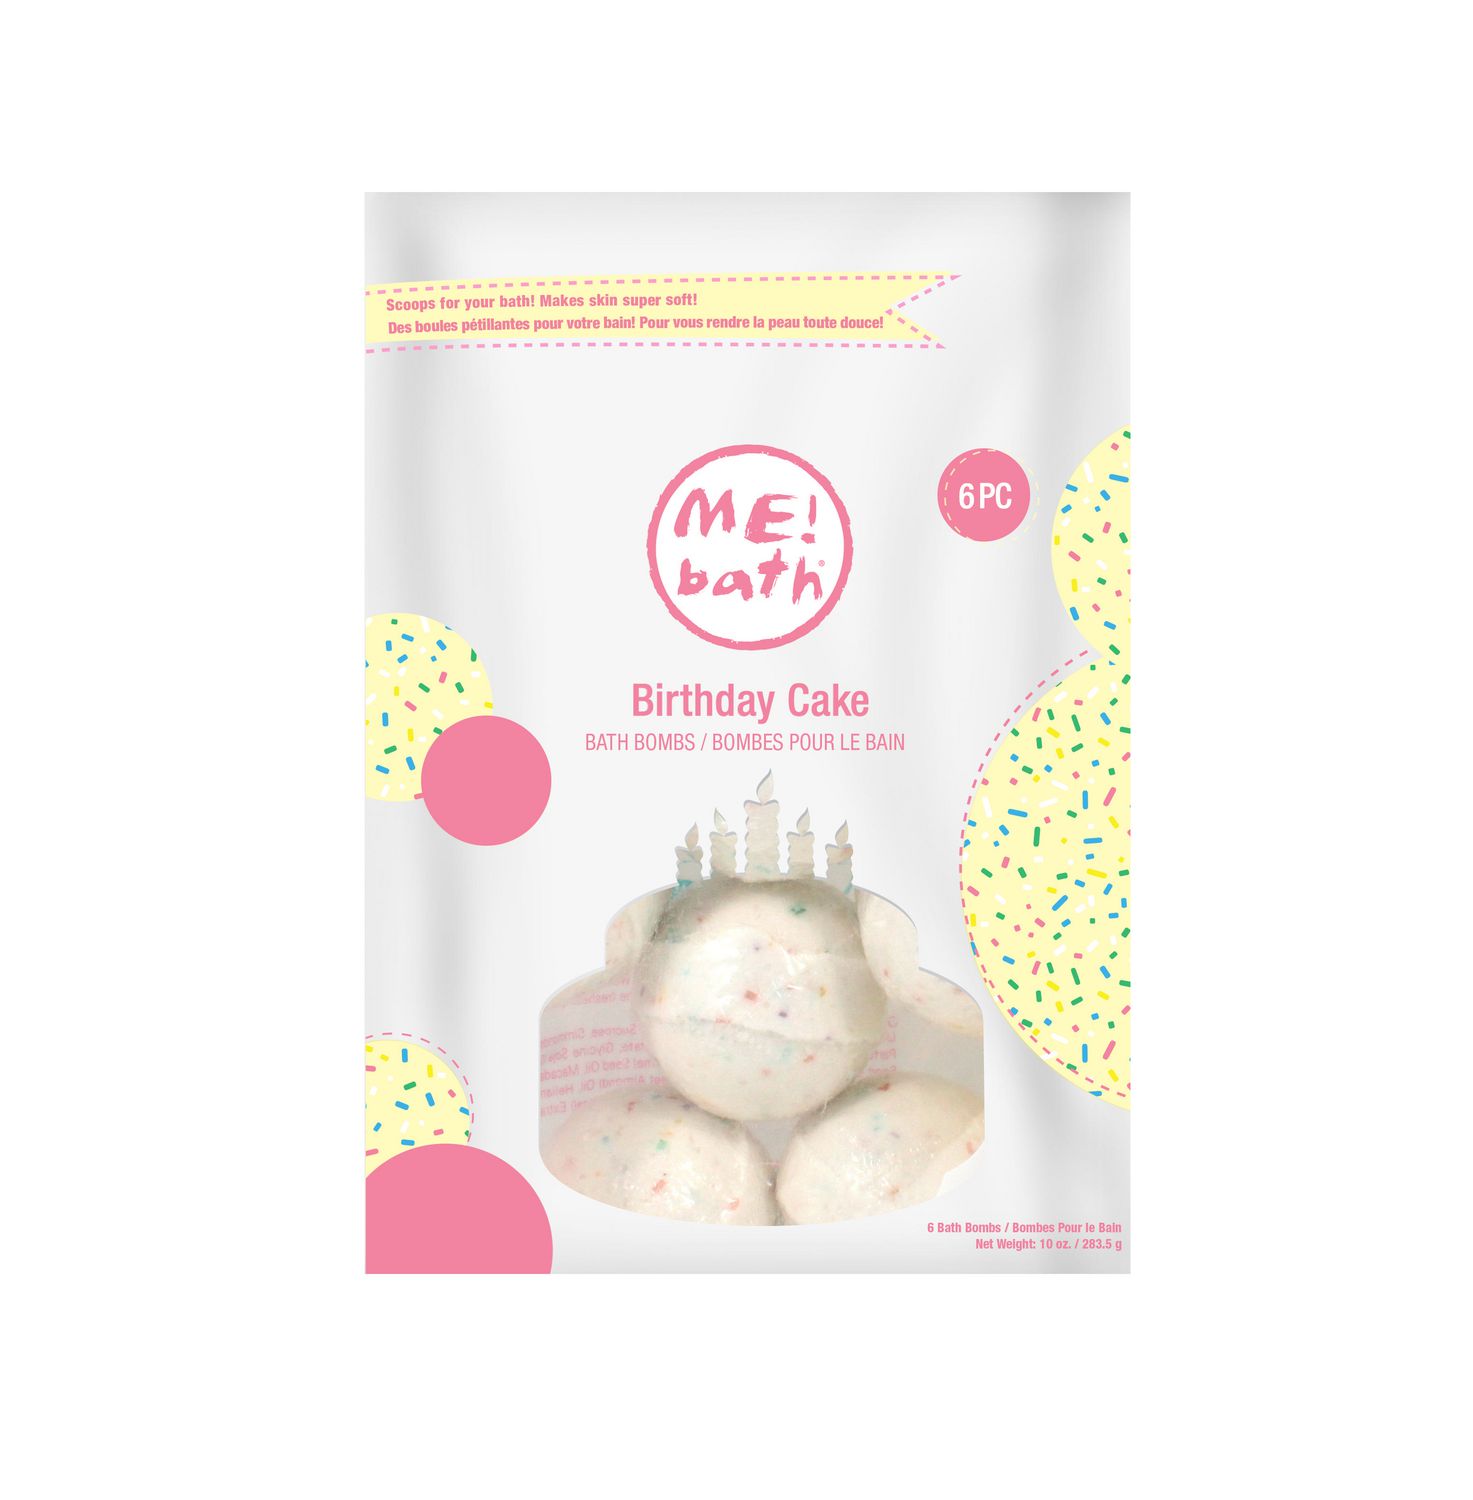 Me! Bath Bombs, 6pc- Birthday Cake - Crafts Direct